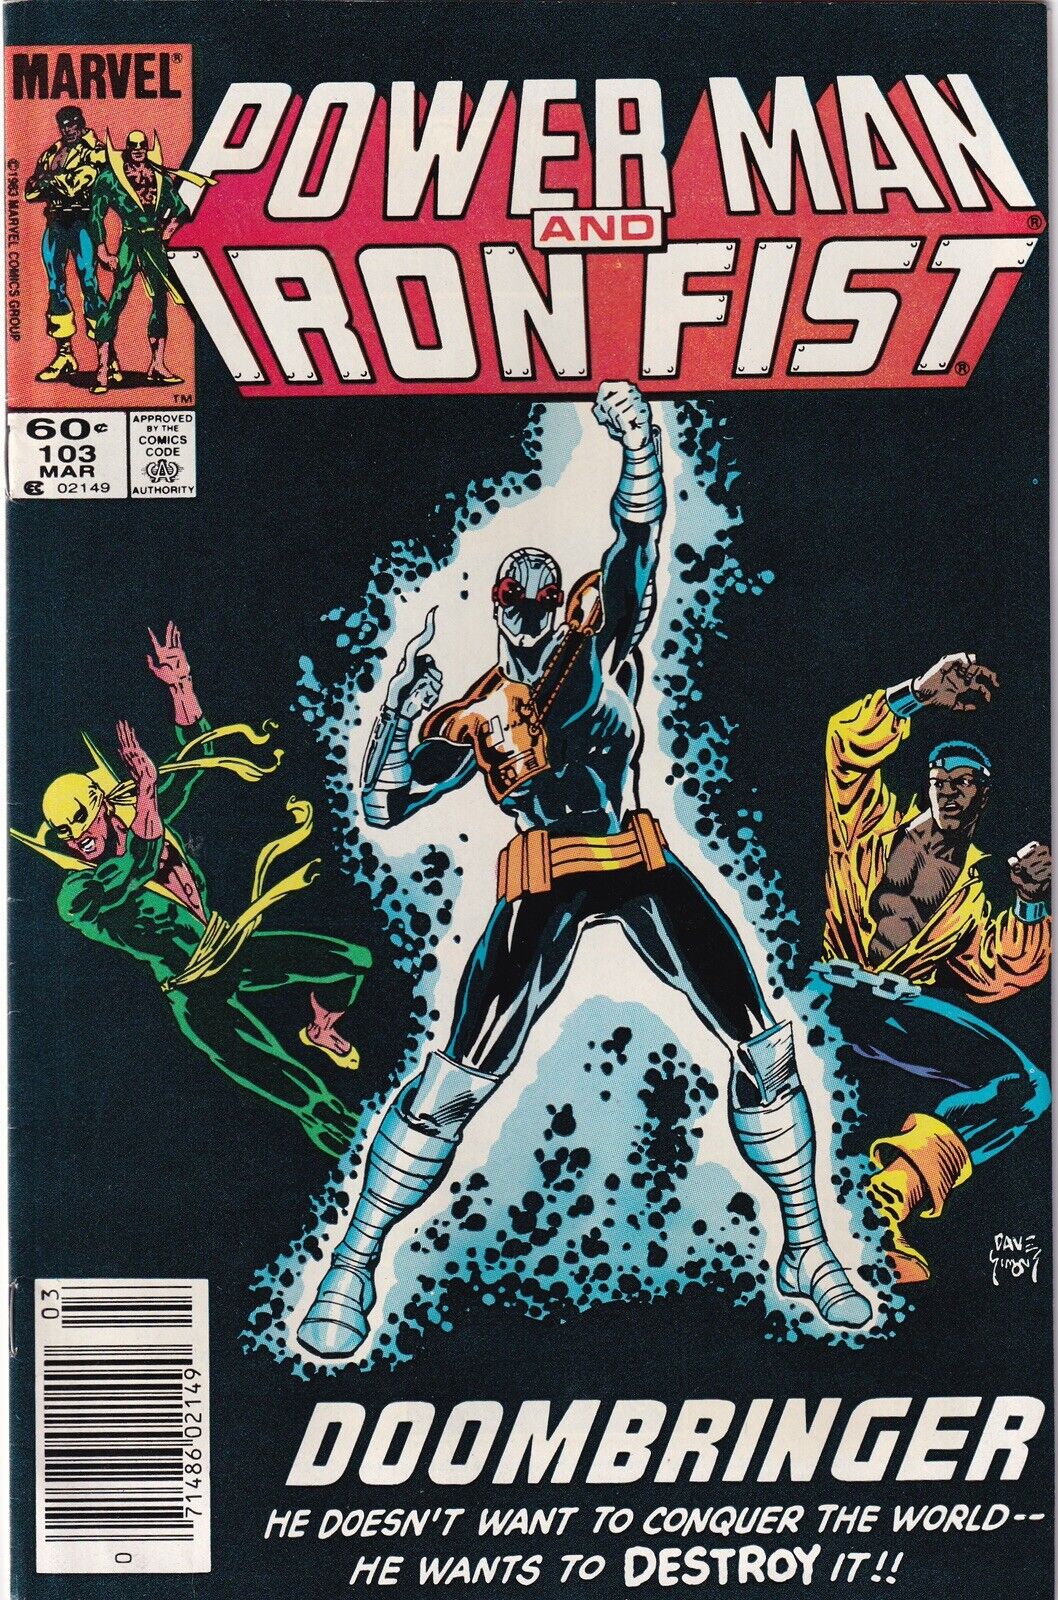 Power Man & Iron Fist #103 (marvel Comics, 1984)